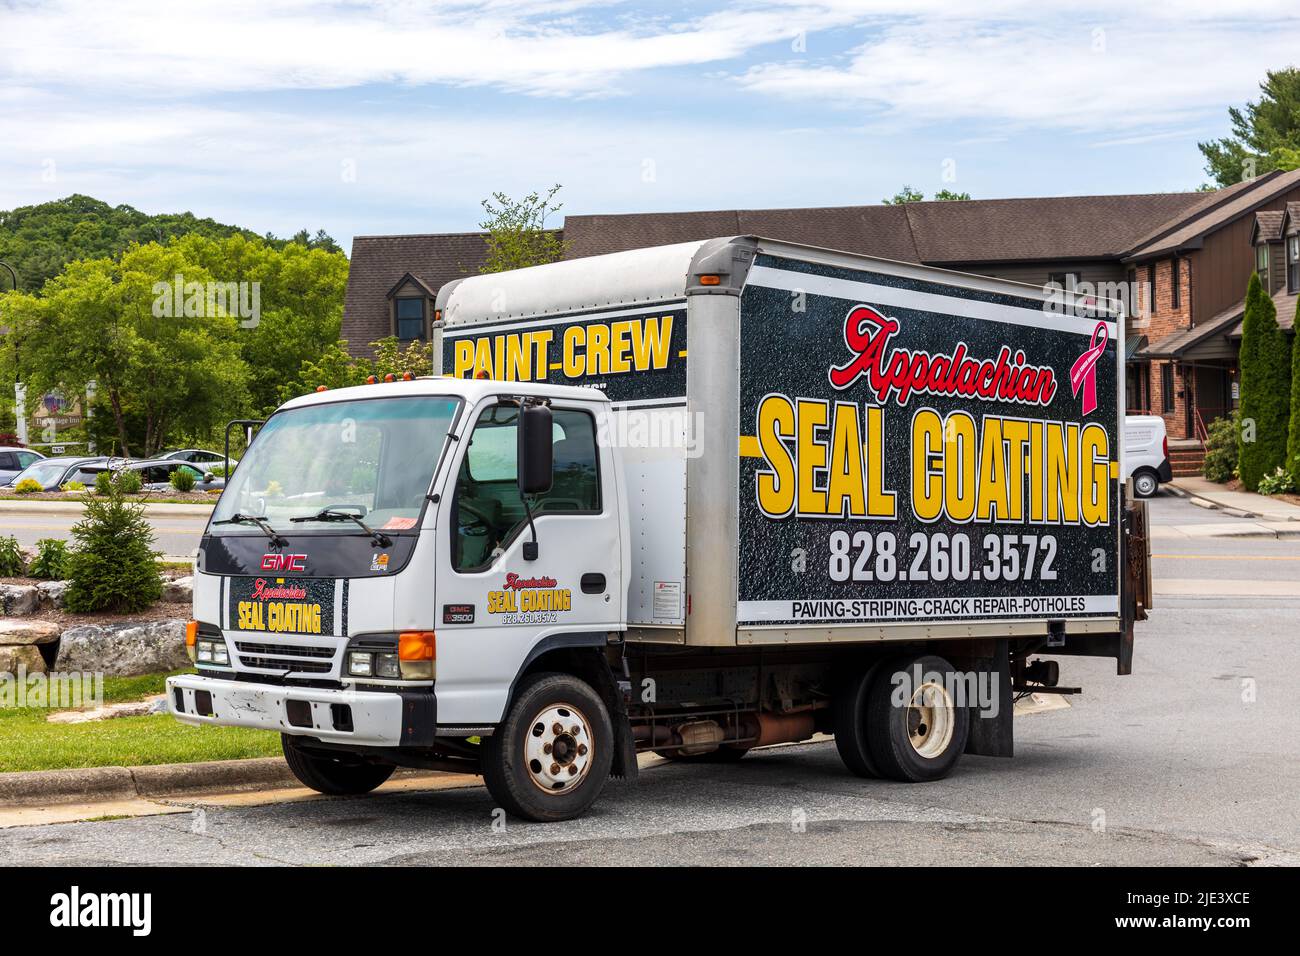 BLOWING ROCK, NC, USA-20 JUNE 2022: Commercial truck advertising Appalachian Seal Coating, paving-striping-crack repair-potholes. Stock Photo